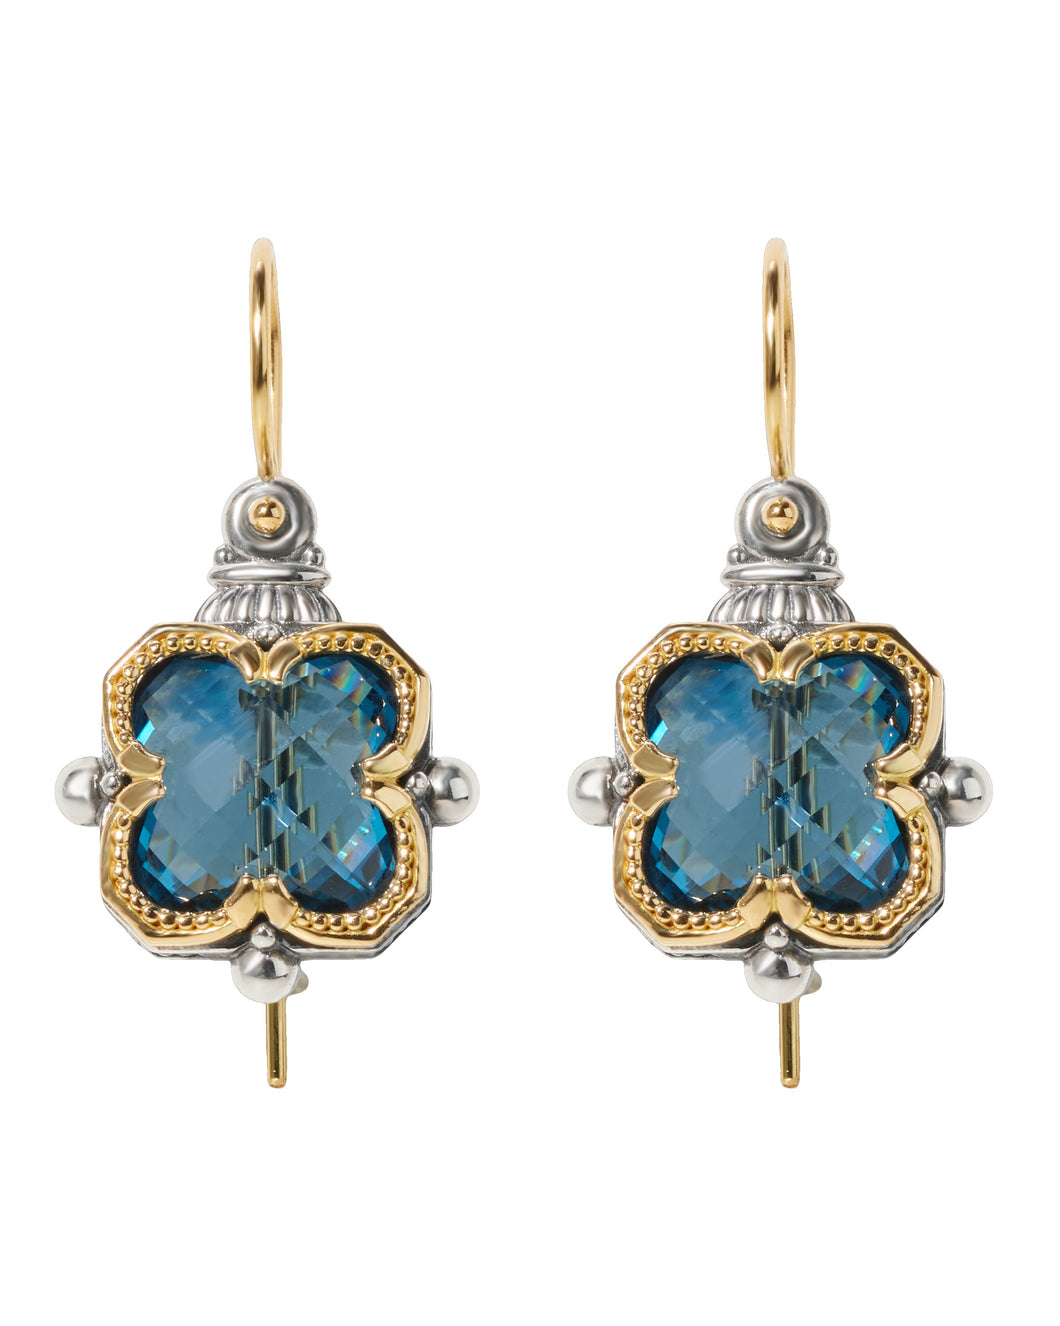 Konstantino Anthos Sterling Silver 18k Gold & Blue Spinel Earrings SKMK3215-478